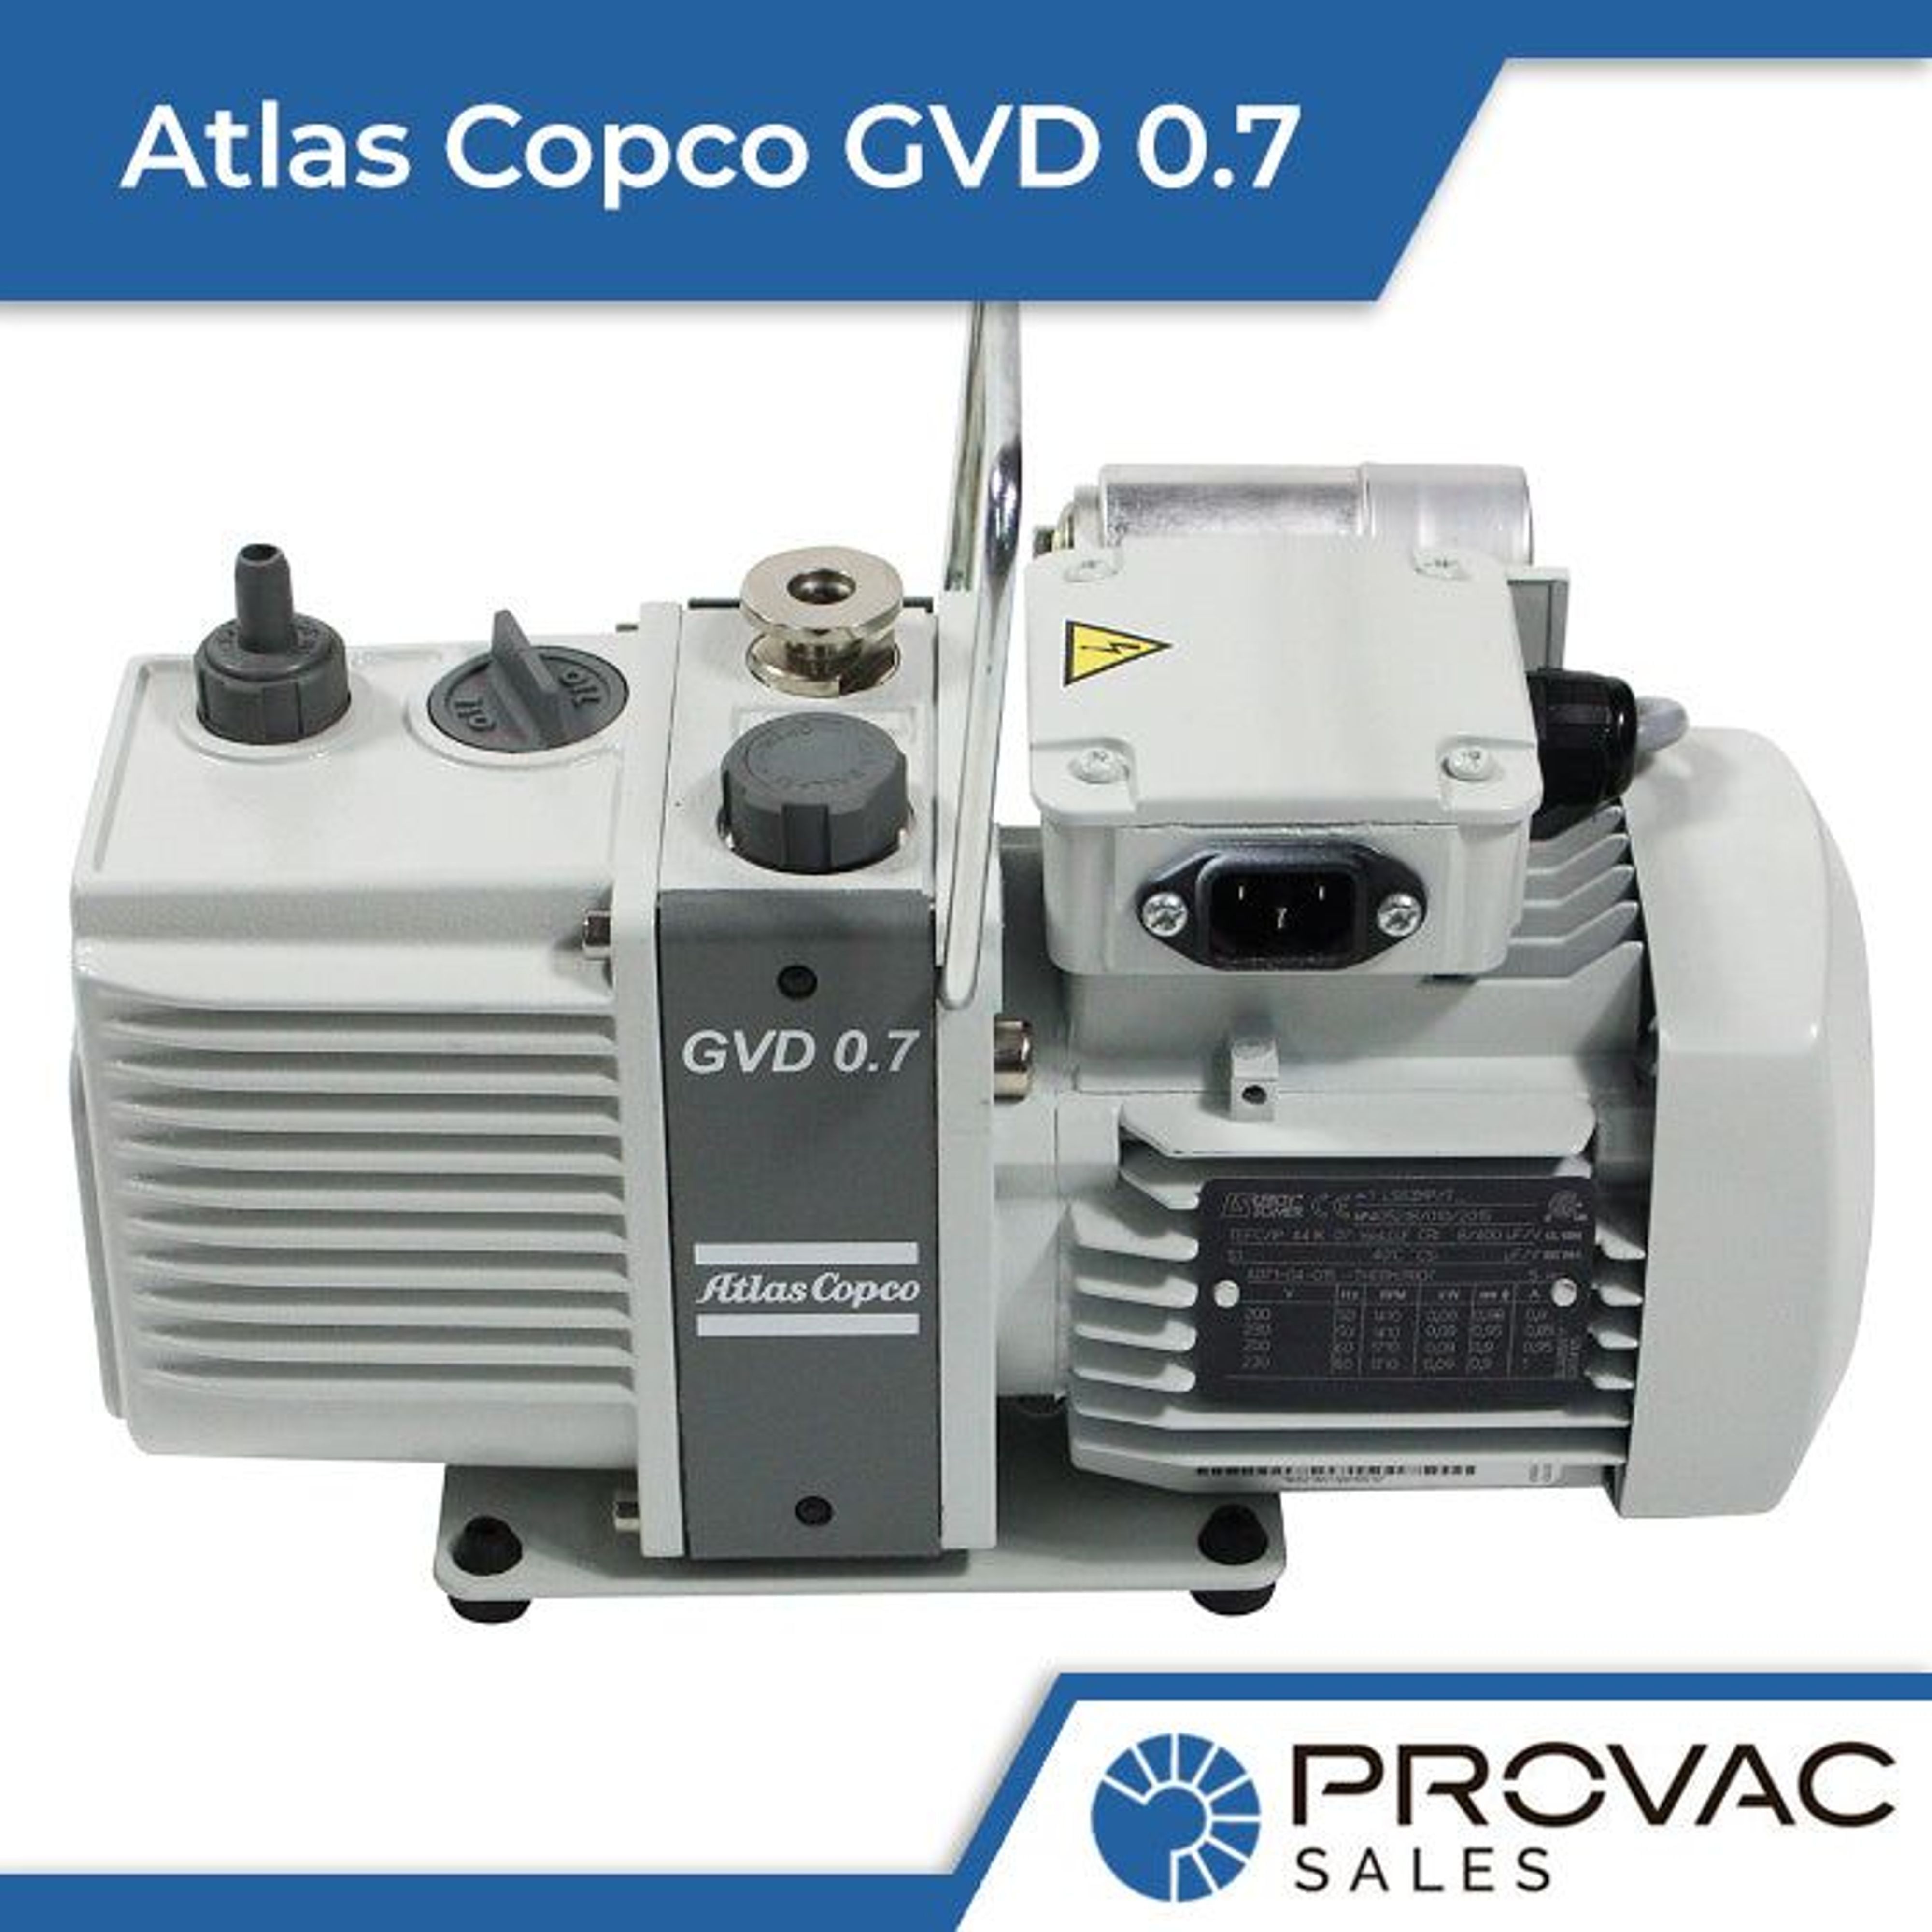 On Sale Now: Atlas Copco GVD 0.7 Rotary Vane Pump Background